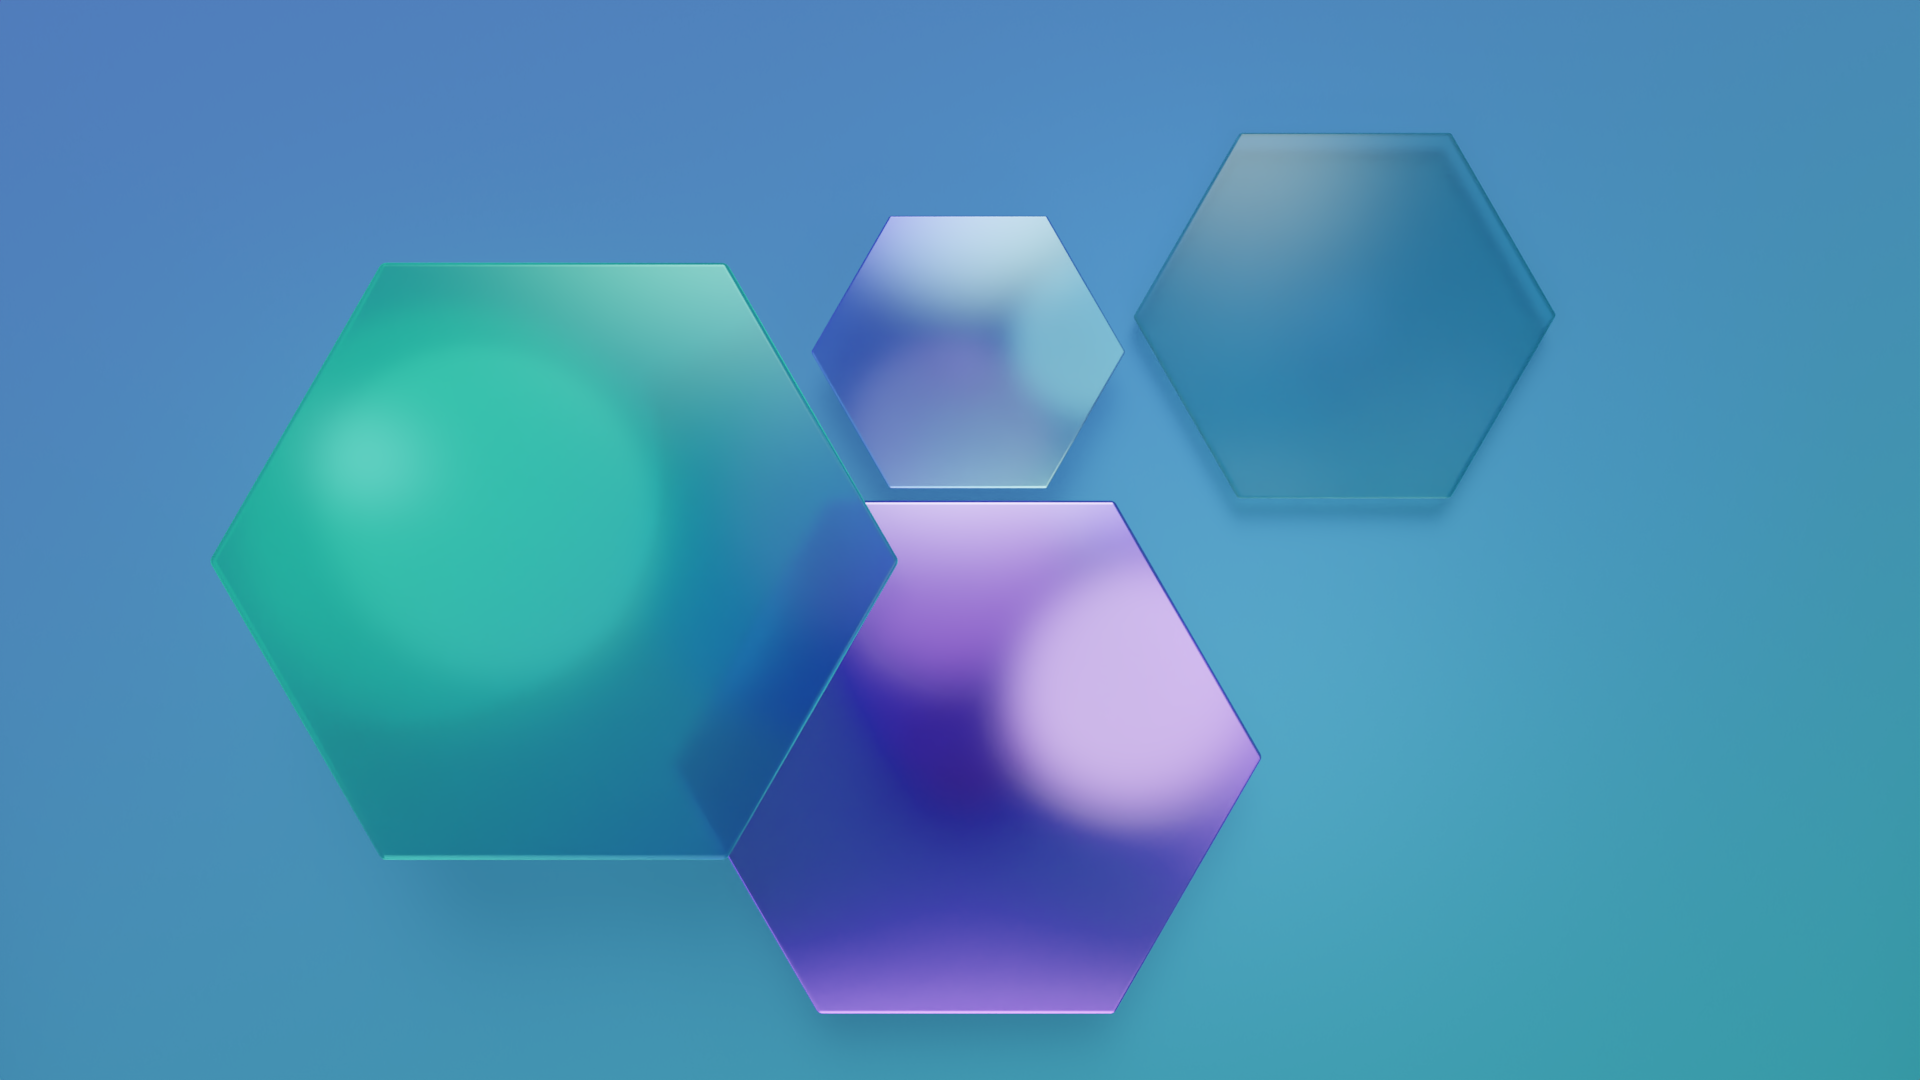 General 1920x1080 glass glassmorphism Blender minimalism gradient hexagon blue background blue simple background shapes digital art